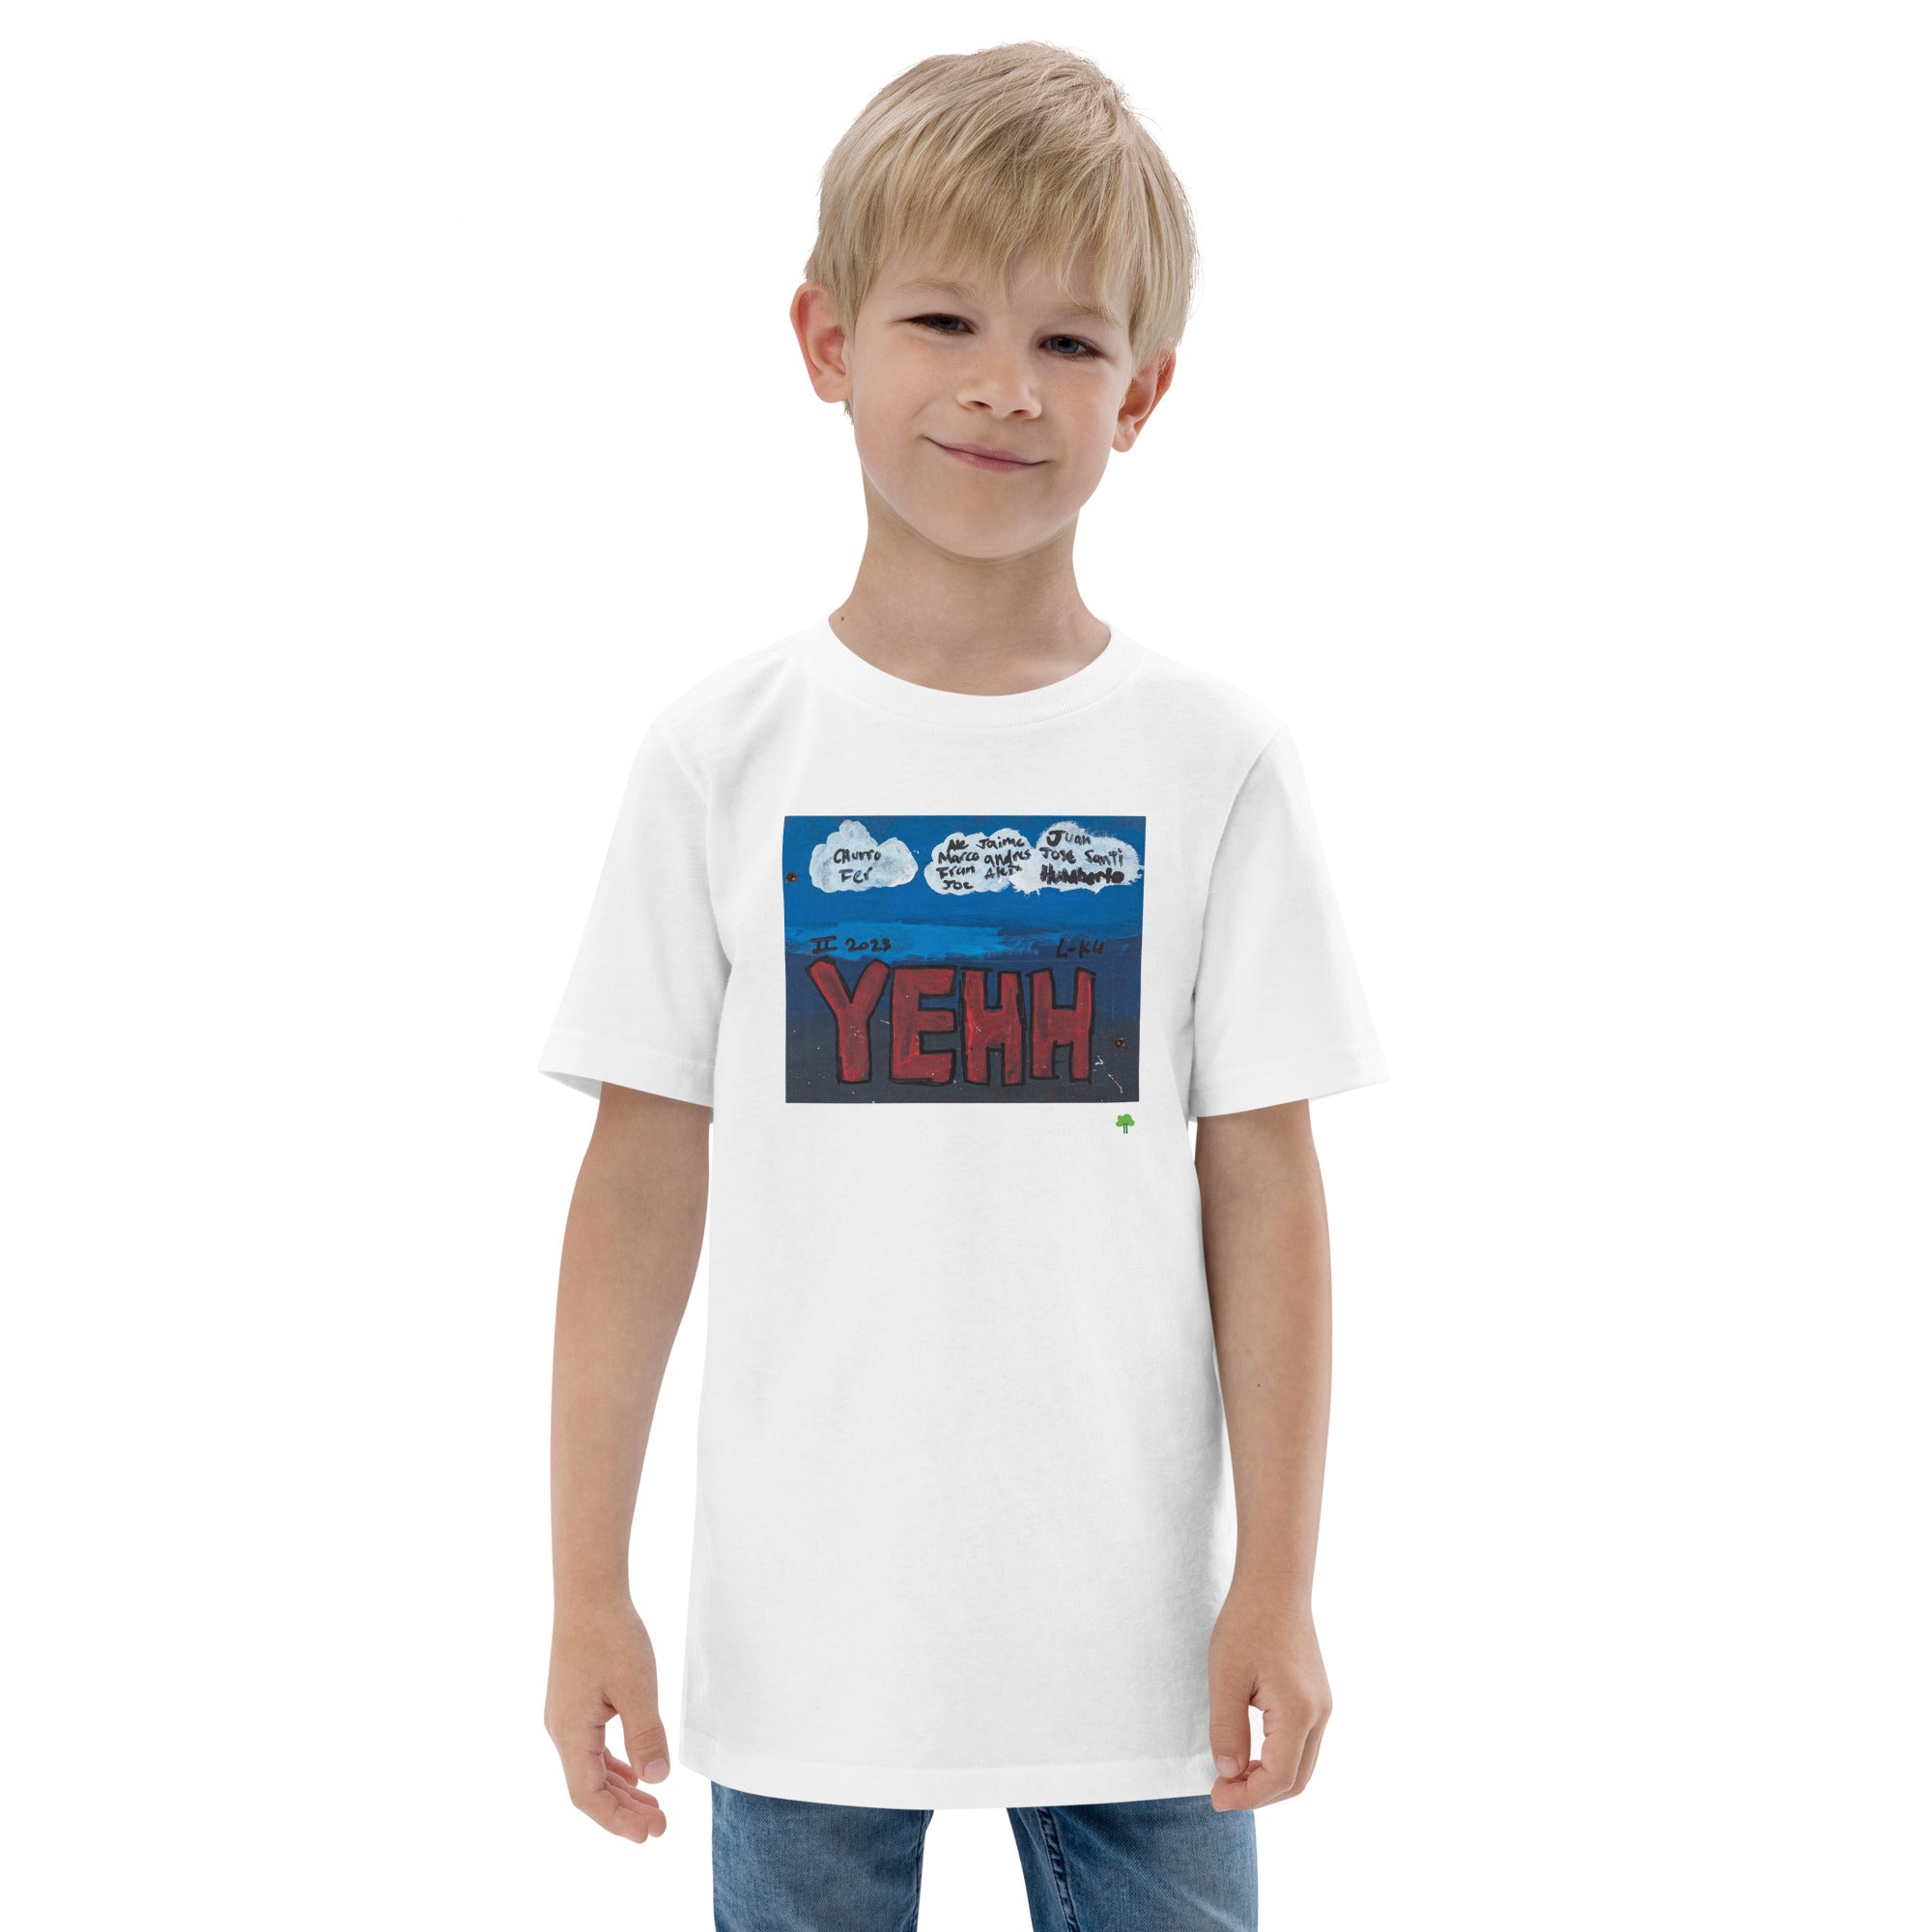 II Temp - Lago - K4 | Youth jersey t-shirt